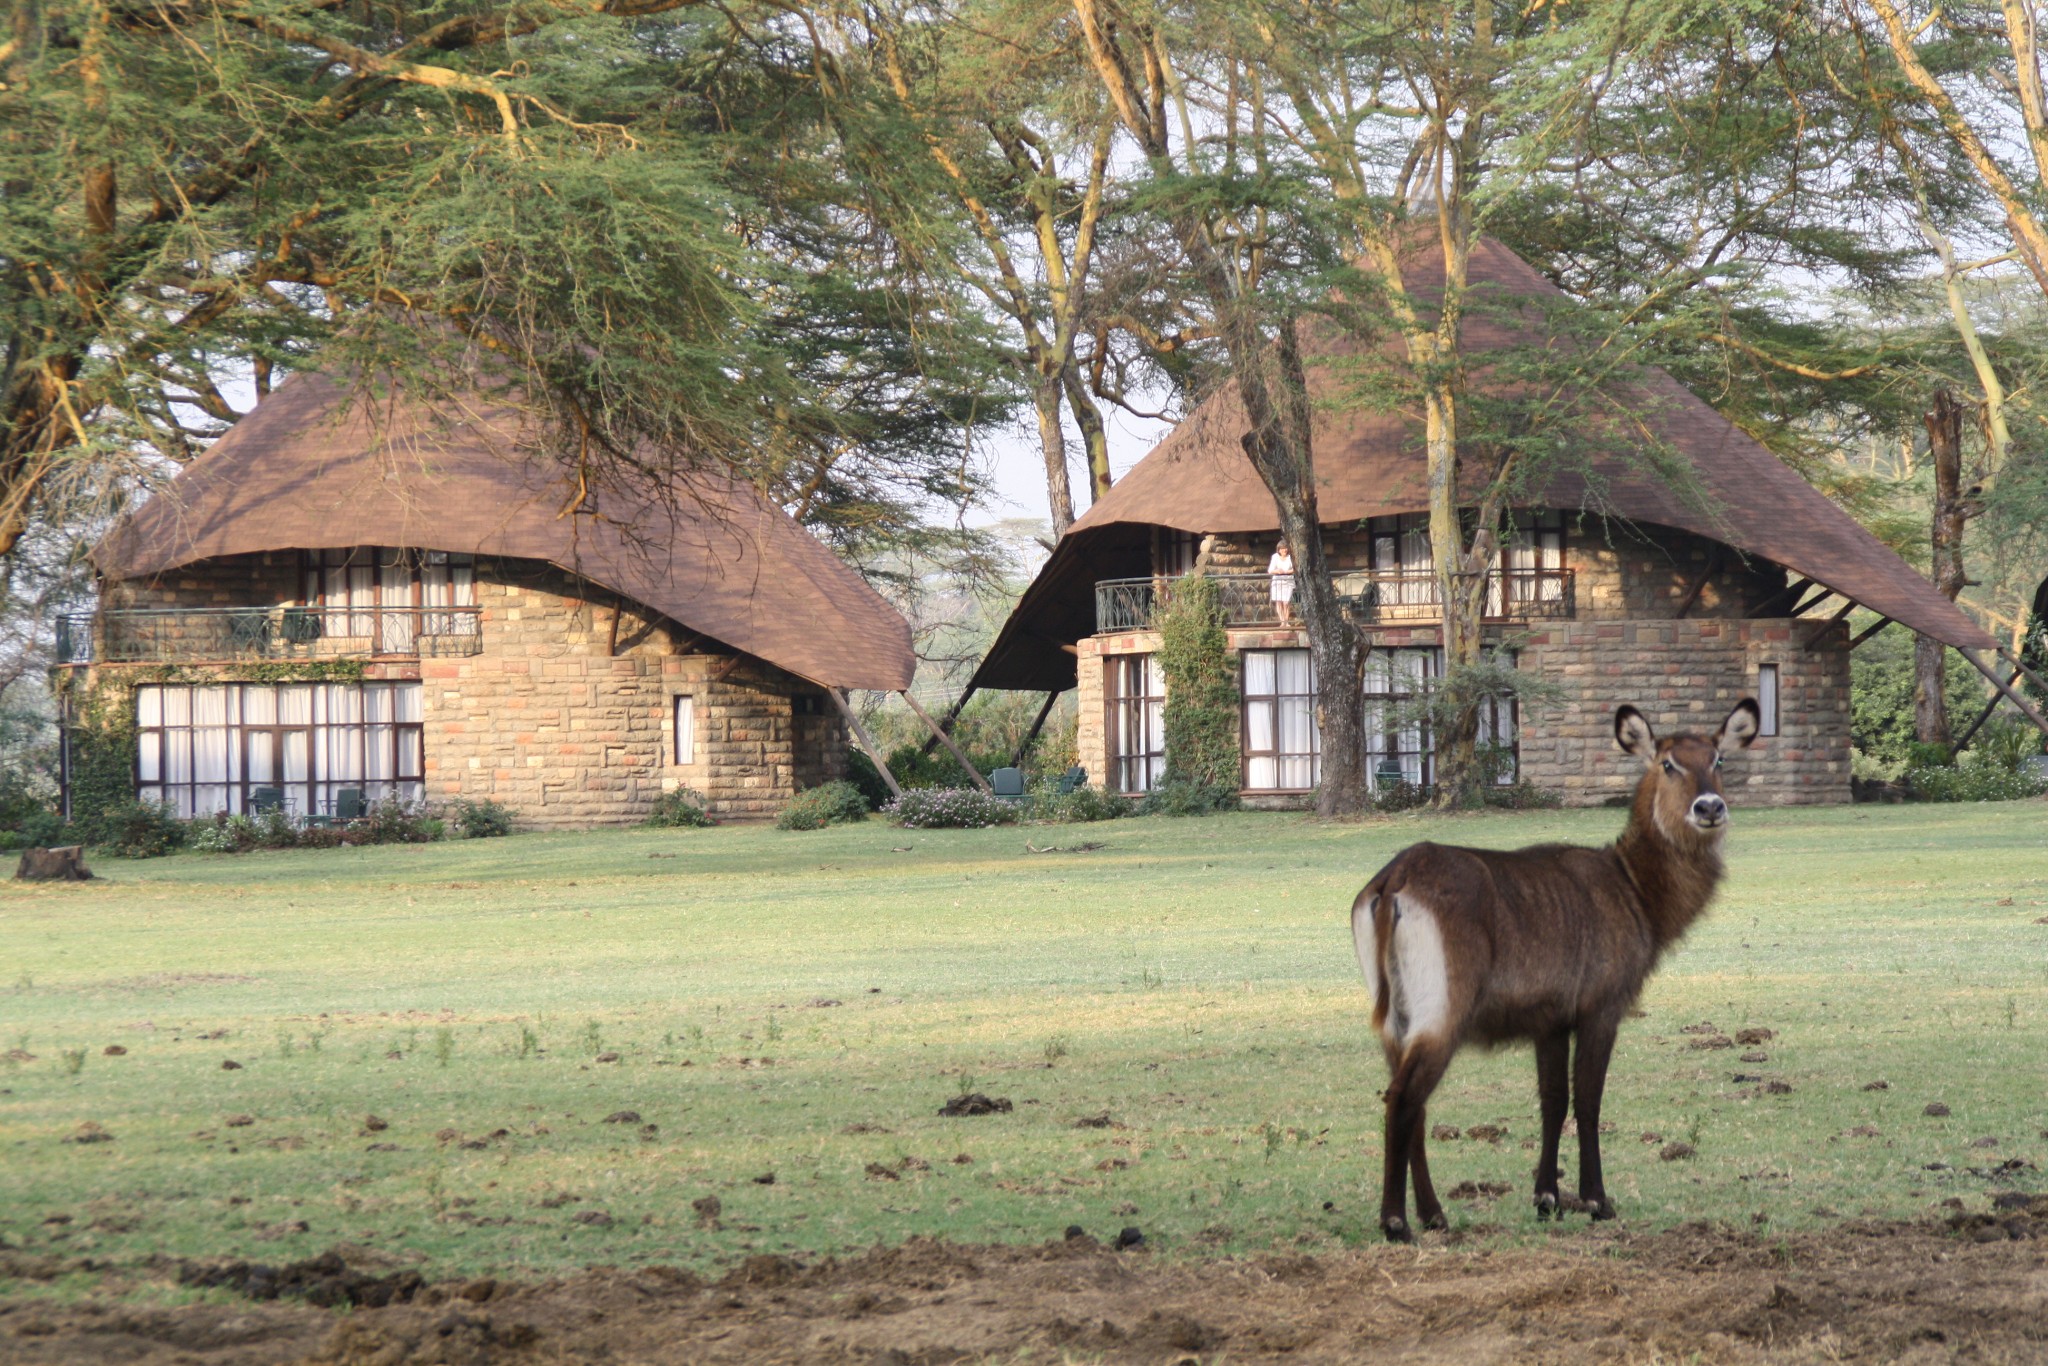 Kenya Adventure Safaris, YHA Kenya Travel,Active Adventures, Journeys, Destinations.